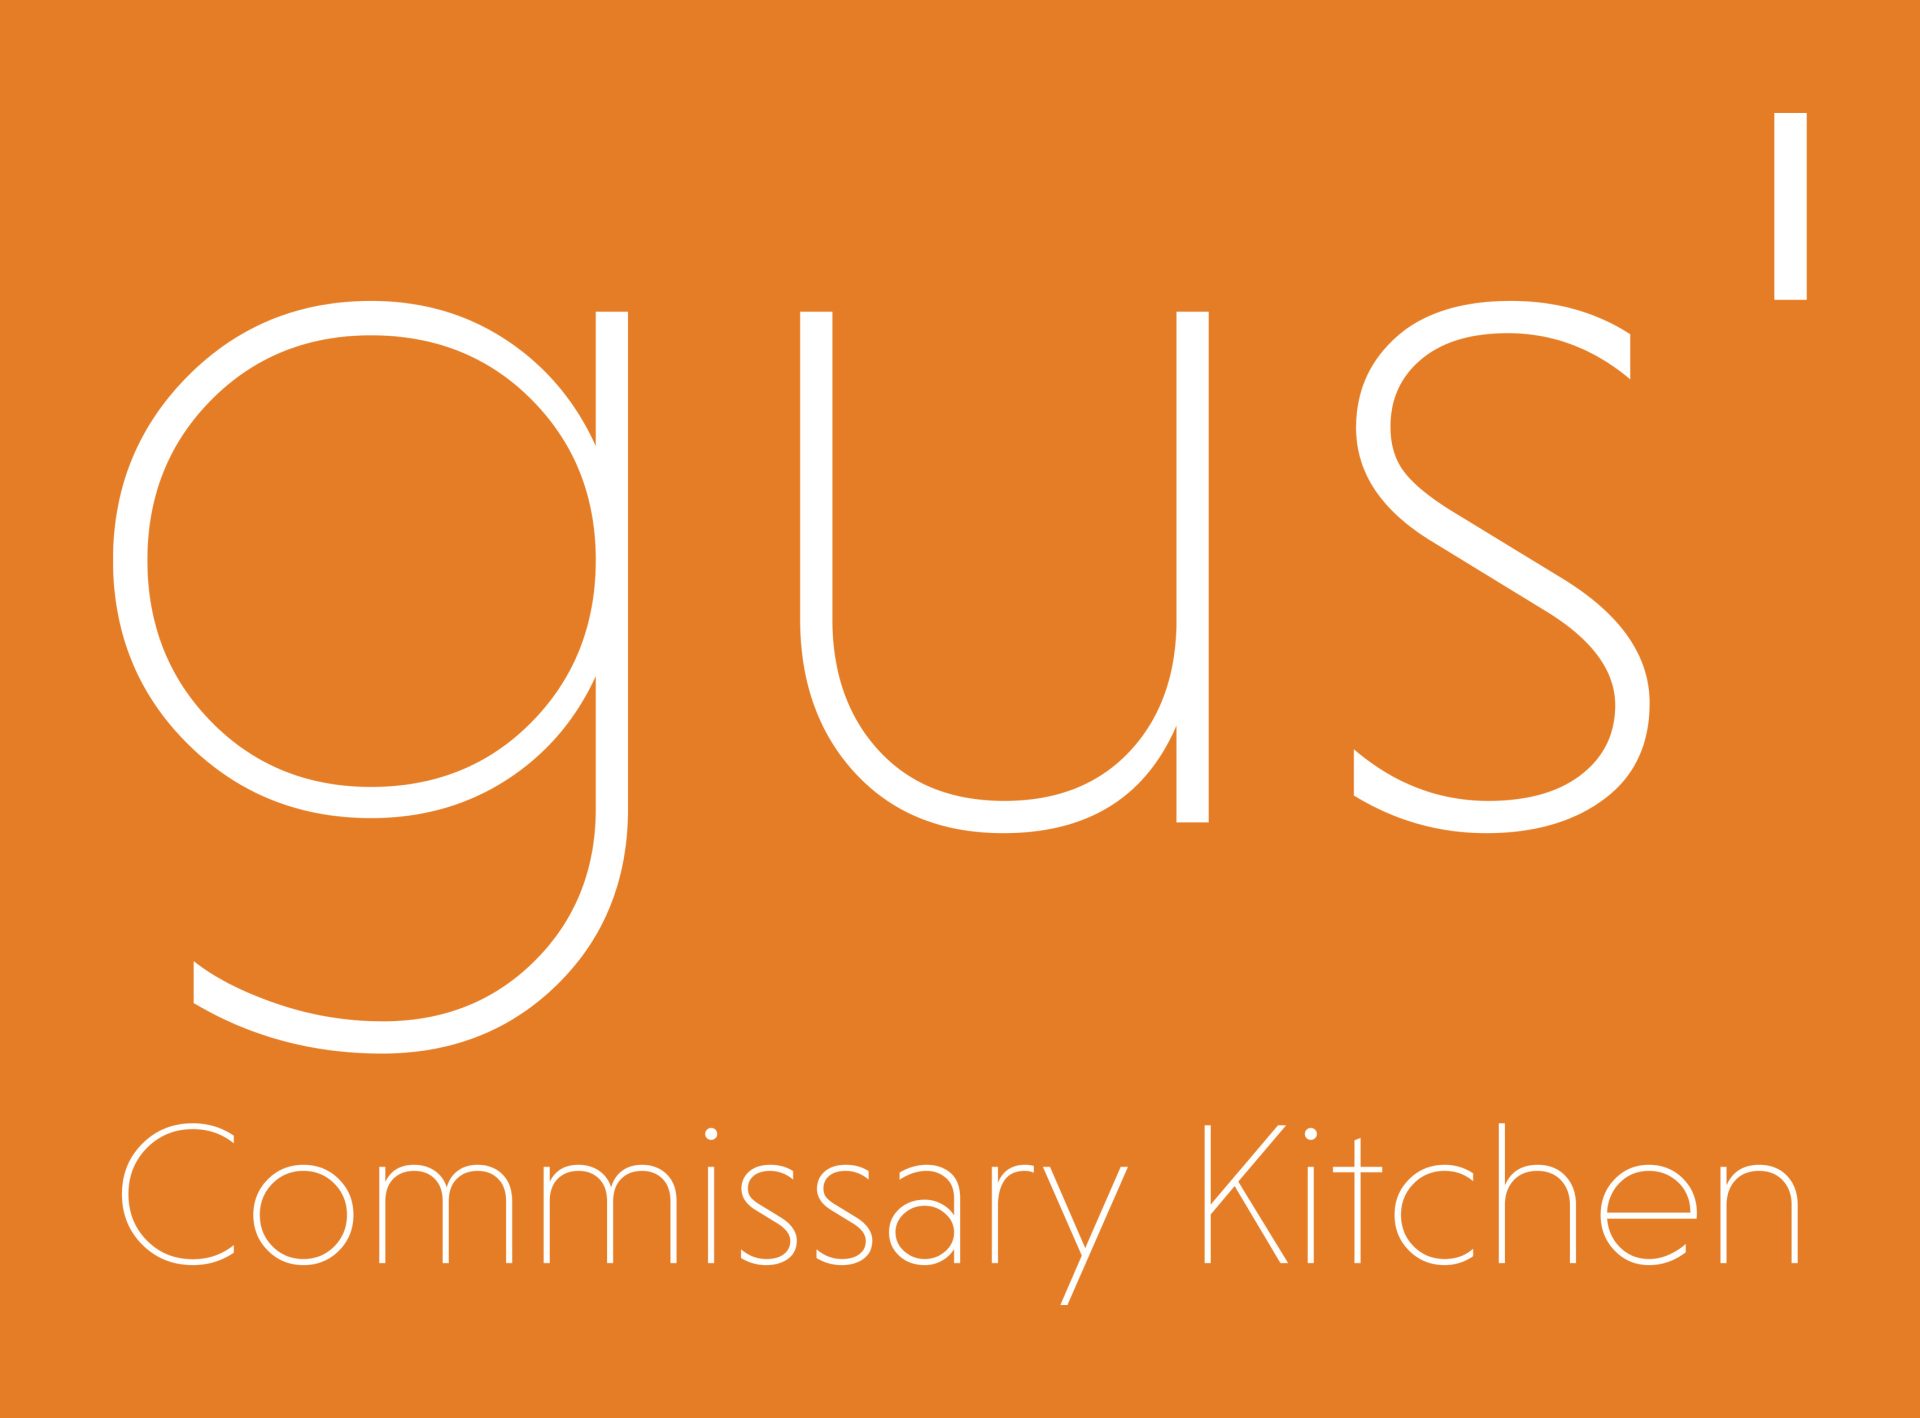 gus' Commissary Kitchen